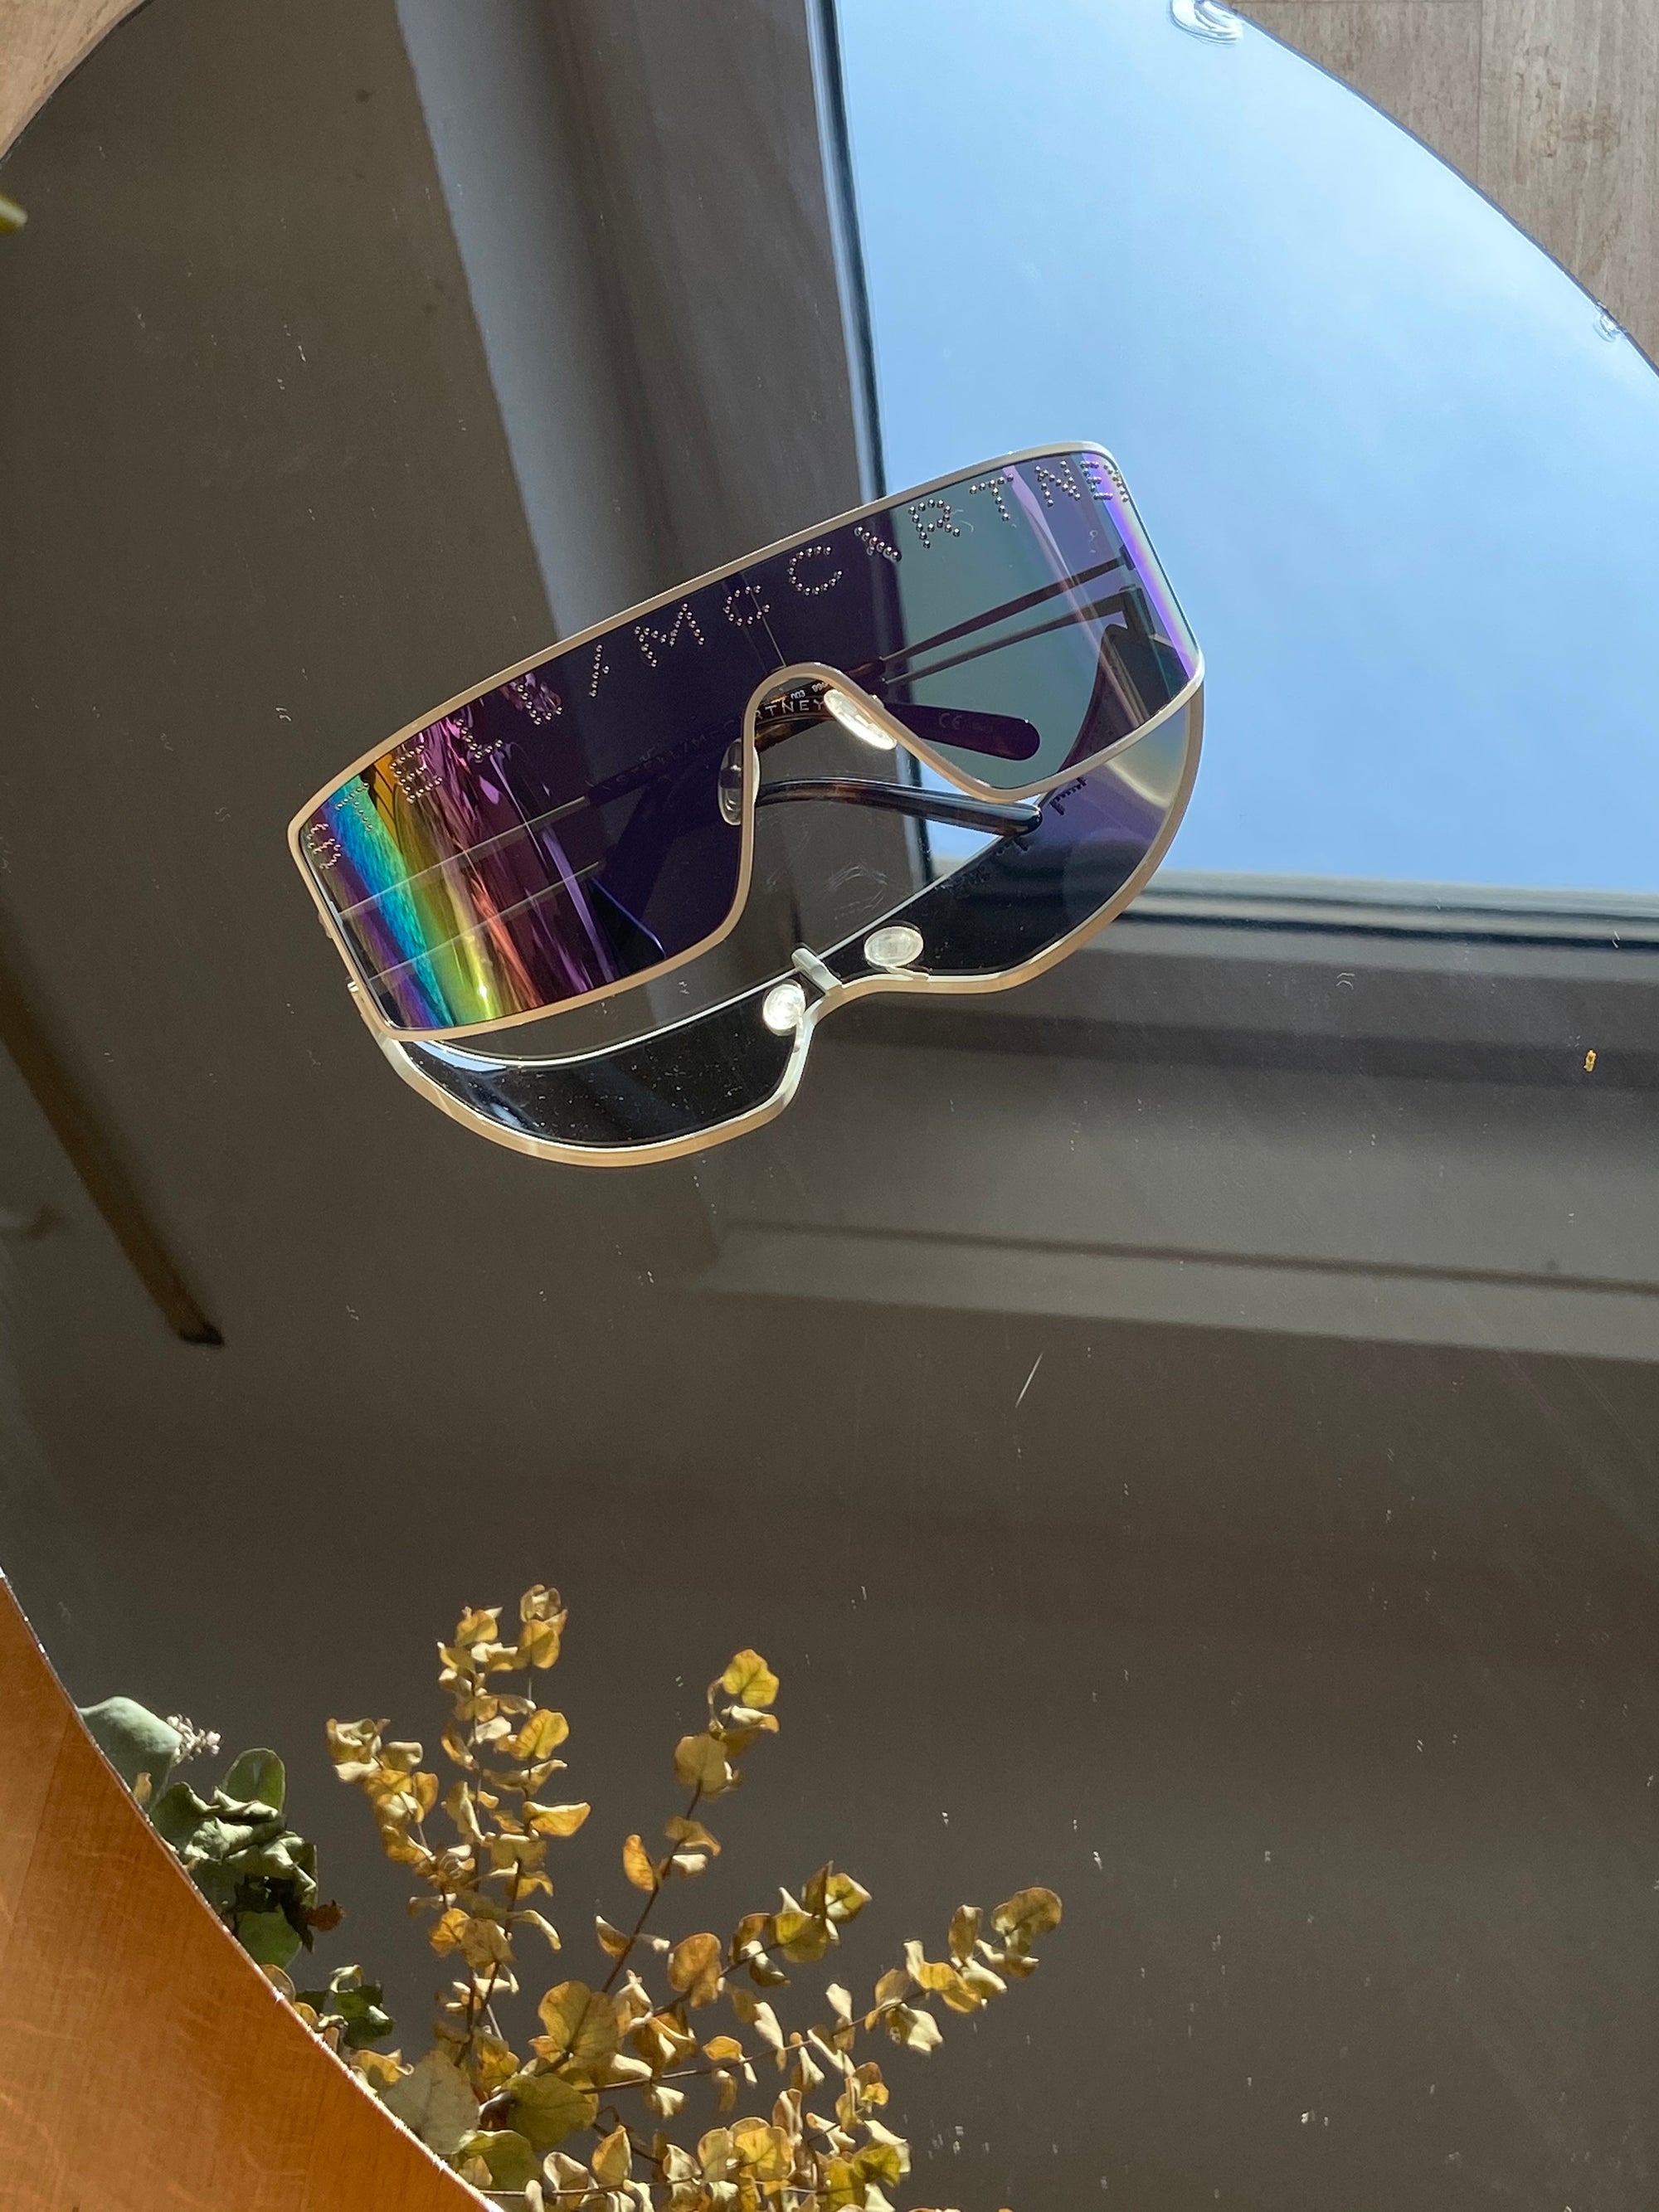 Stella McCartney Sunglasses spacy purple rhinestone